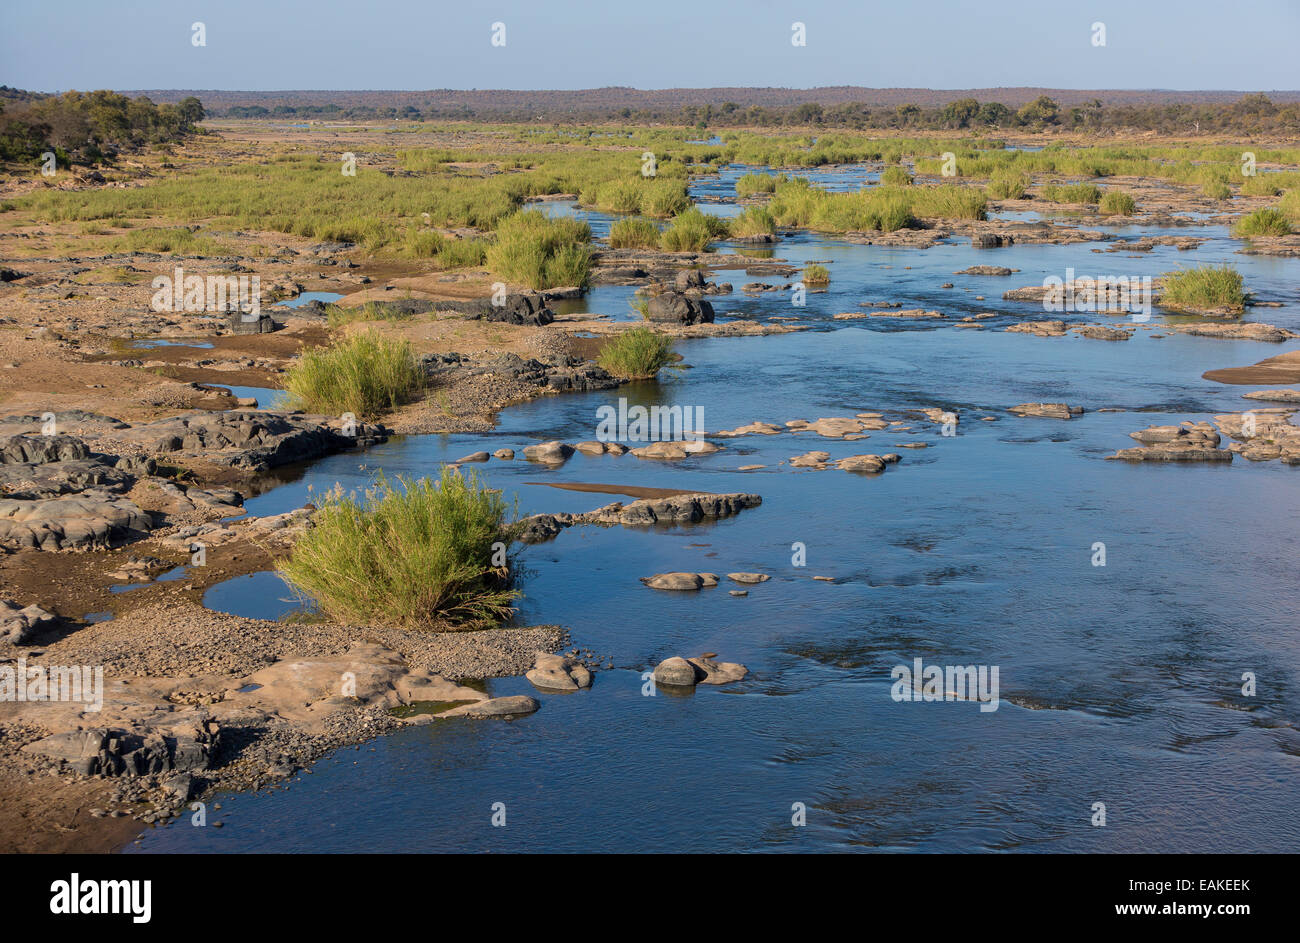 KRUGER NATIONAL PARK, SOUTH AFRICA - Olifants River. Stock Photo